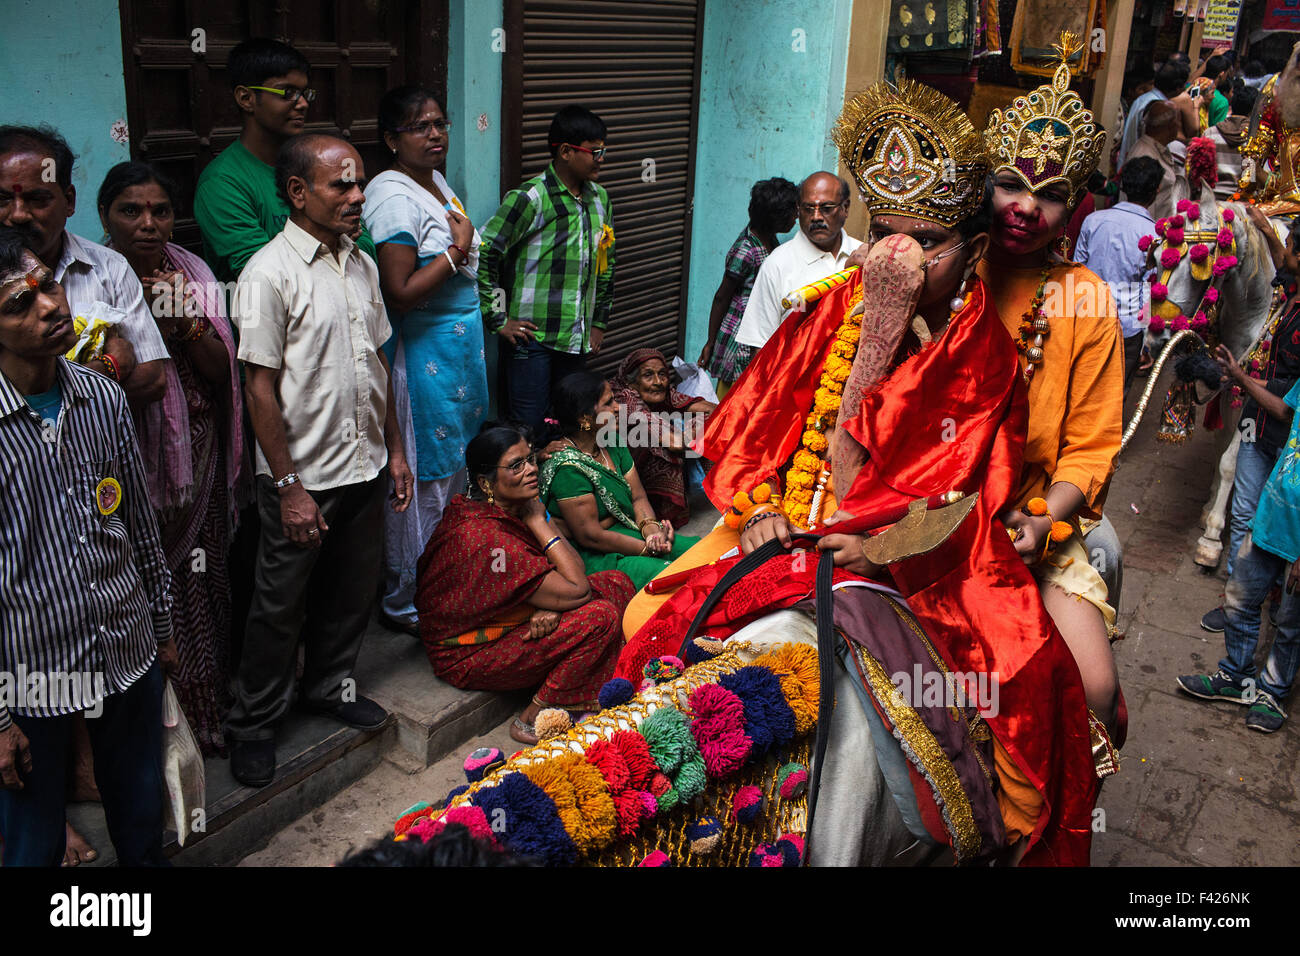 Procession in the old city during Maha Shivaratri festival in Varanasi, India. Stock Photo